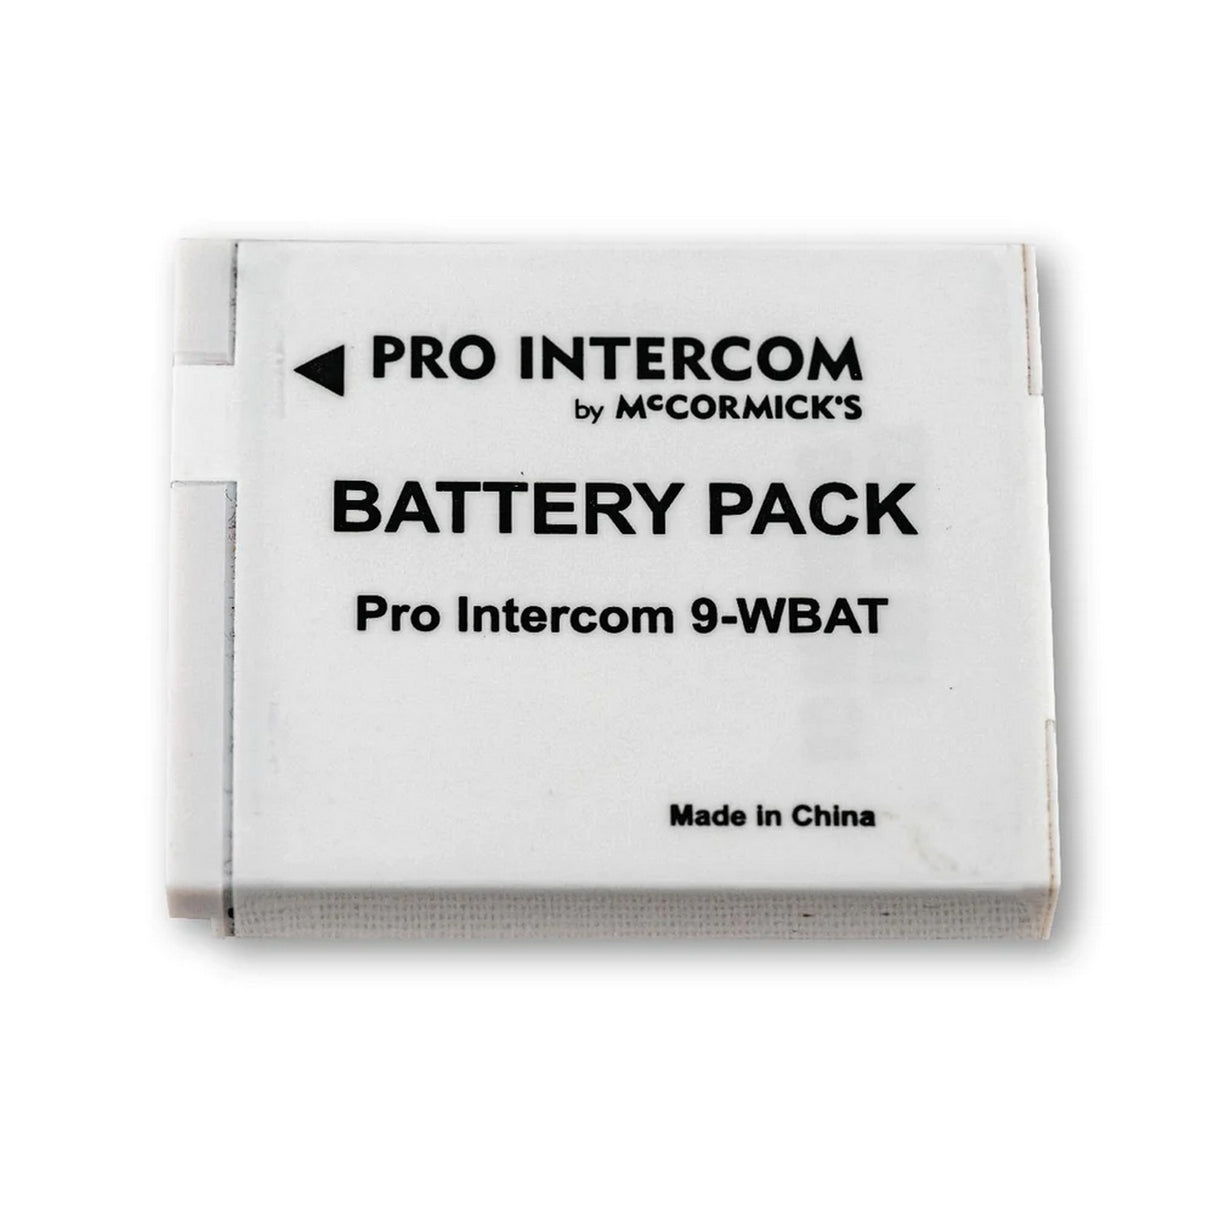 Pro Intercom WBAT Replacement Battery for Wireless Intercom Headsets